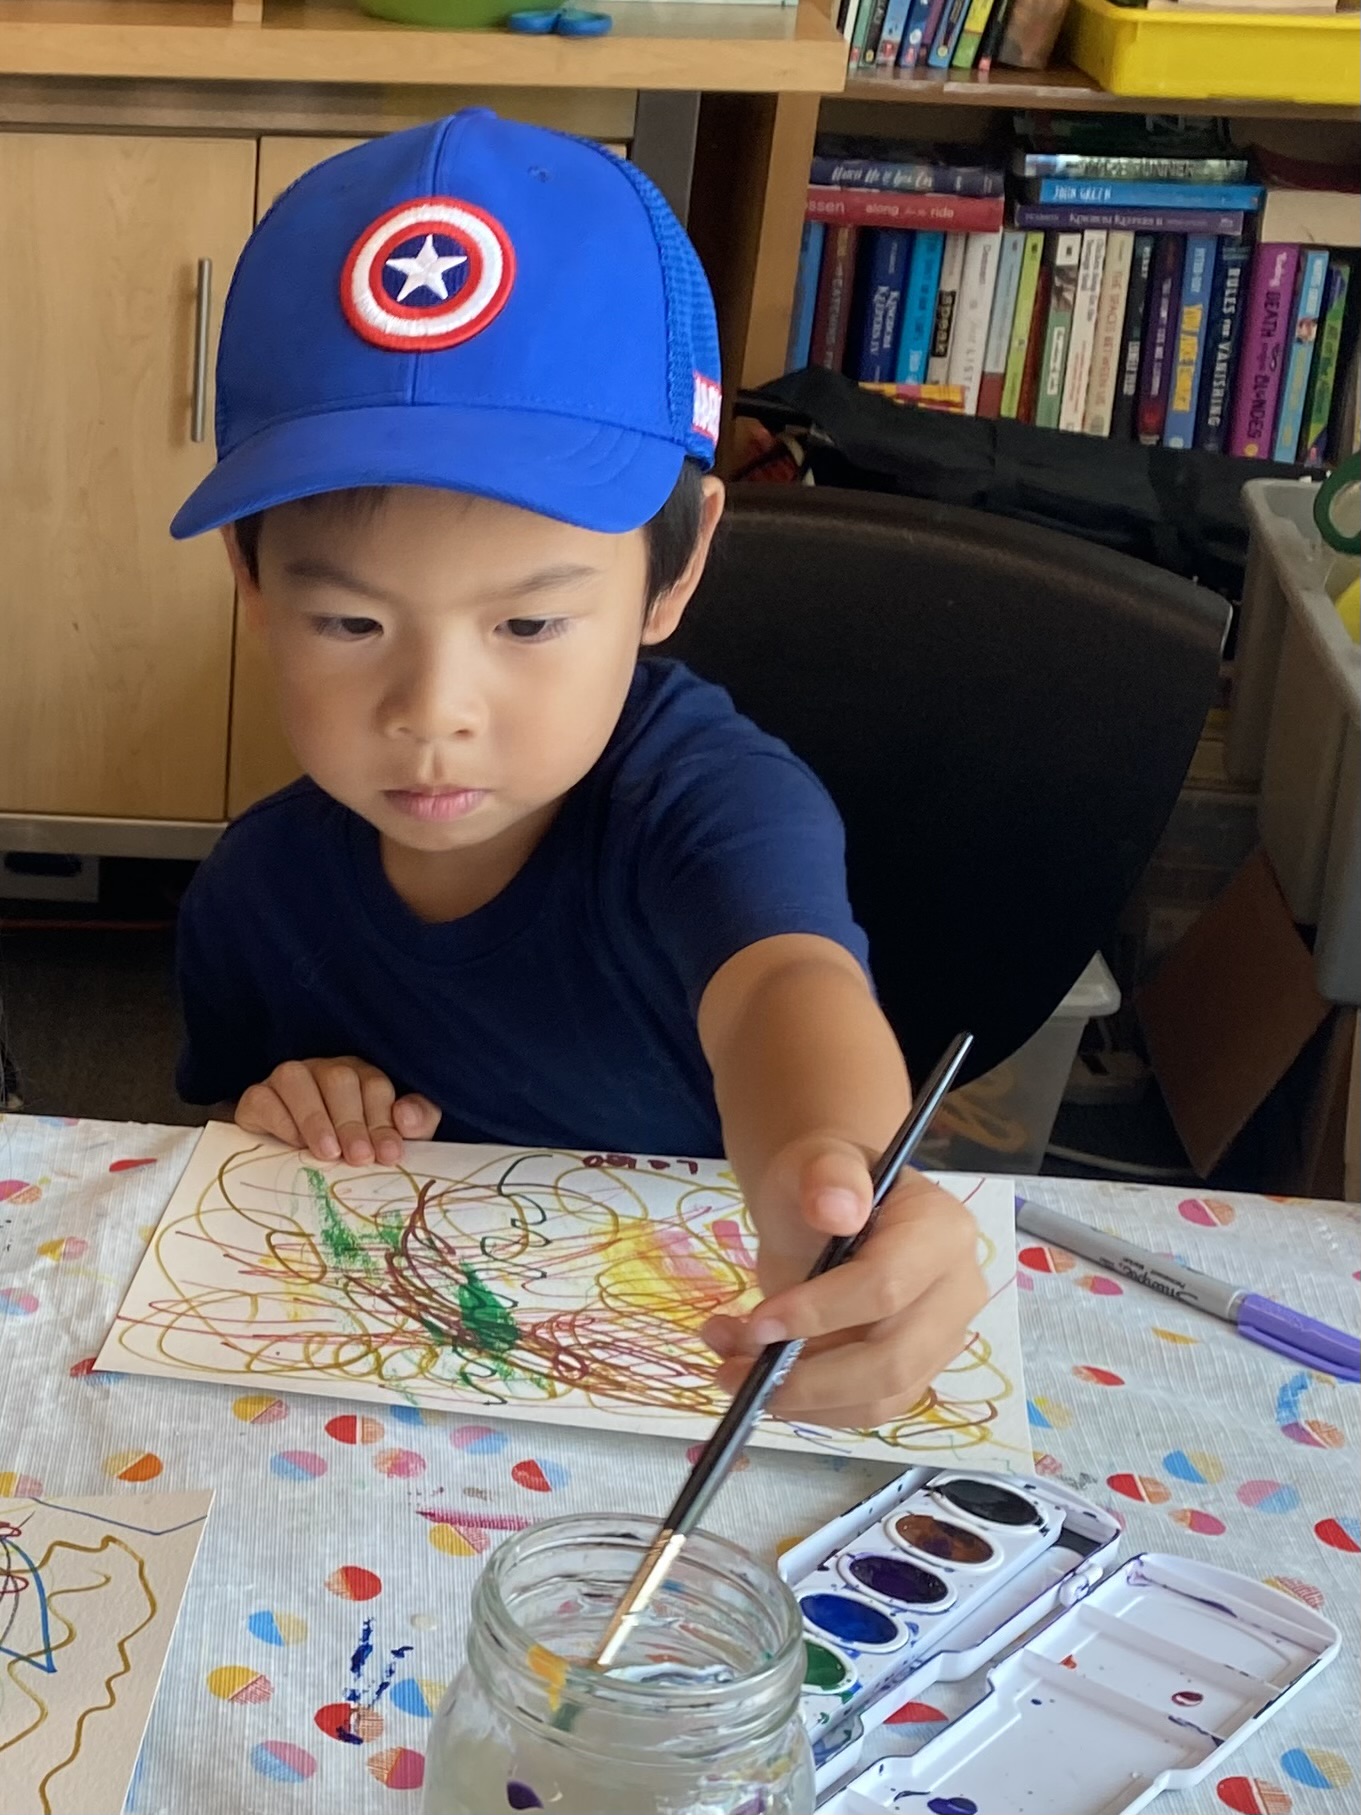 A preschool age boy in a blue baseball cap paints